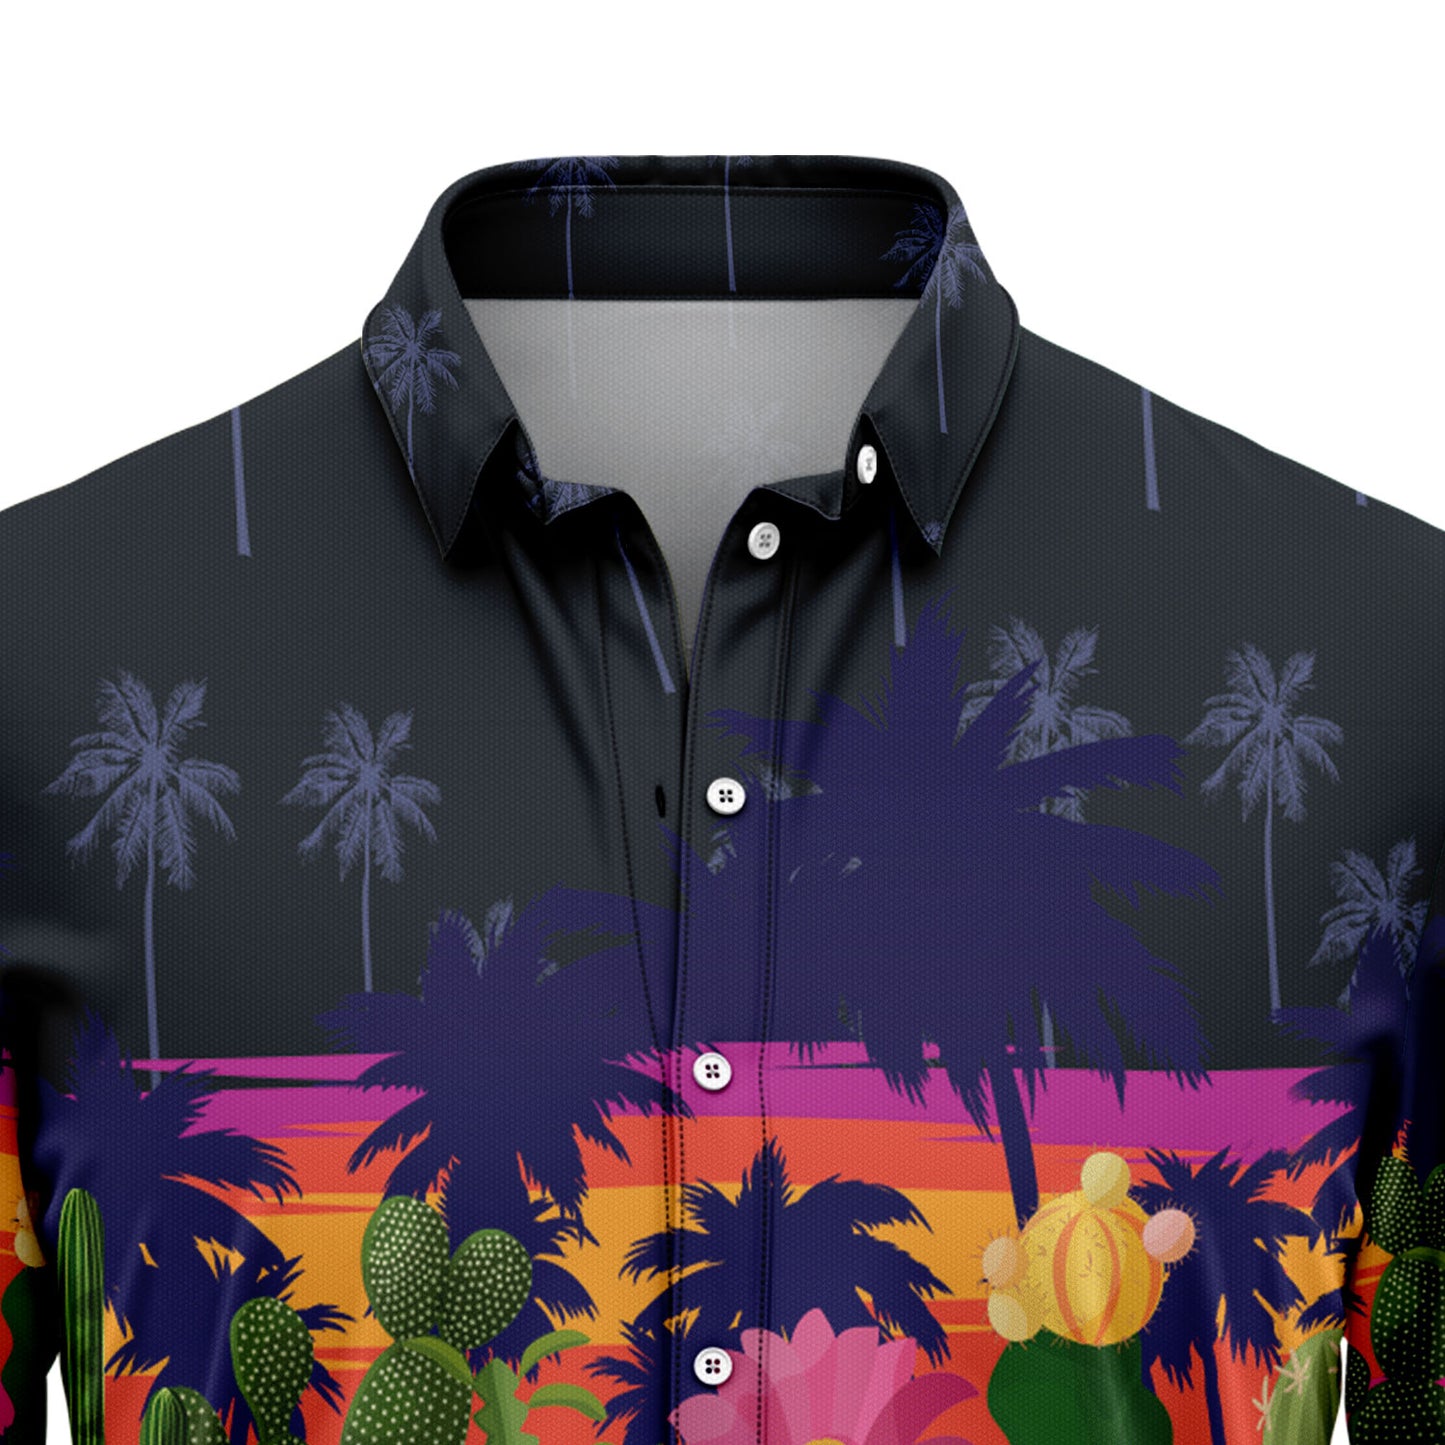 Cactus Border Chest G5714 Hawaiian Shirt